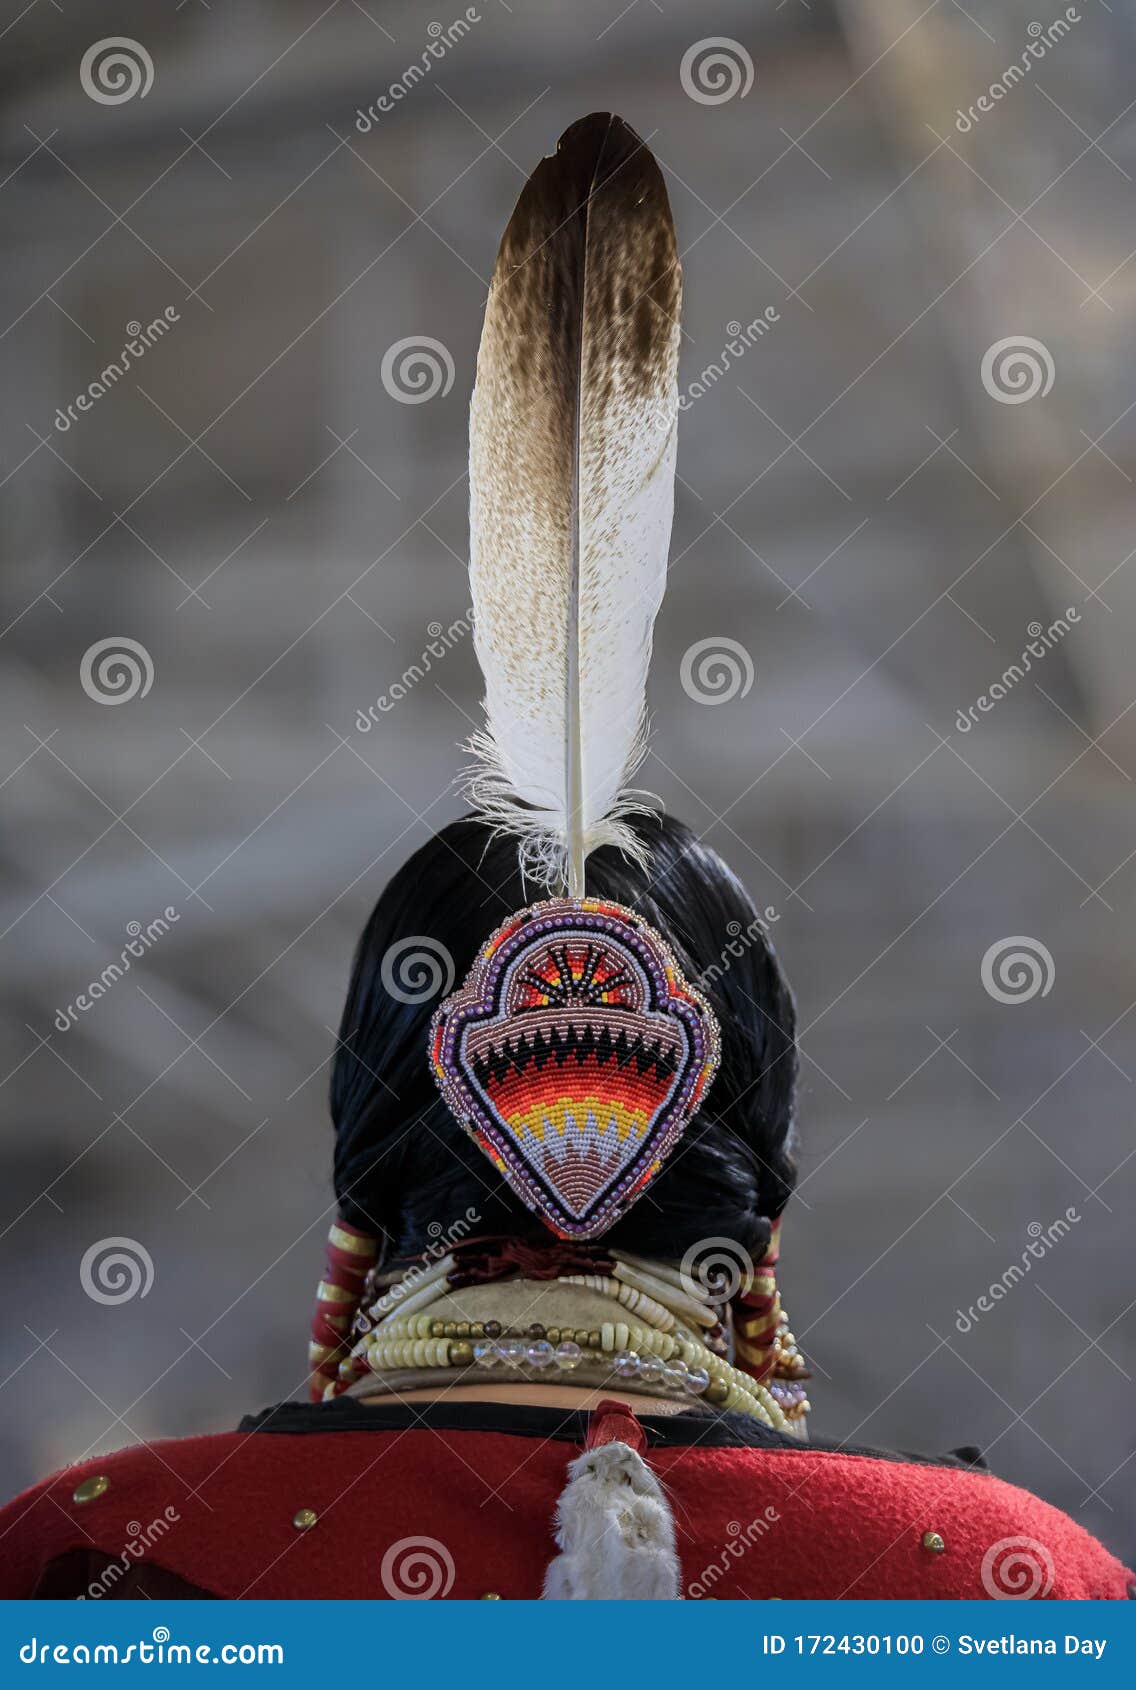 Indian Feather In Hair | estudioespositoymiguel.com.ar